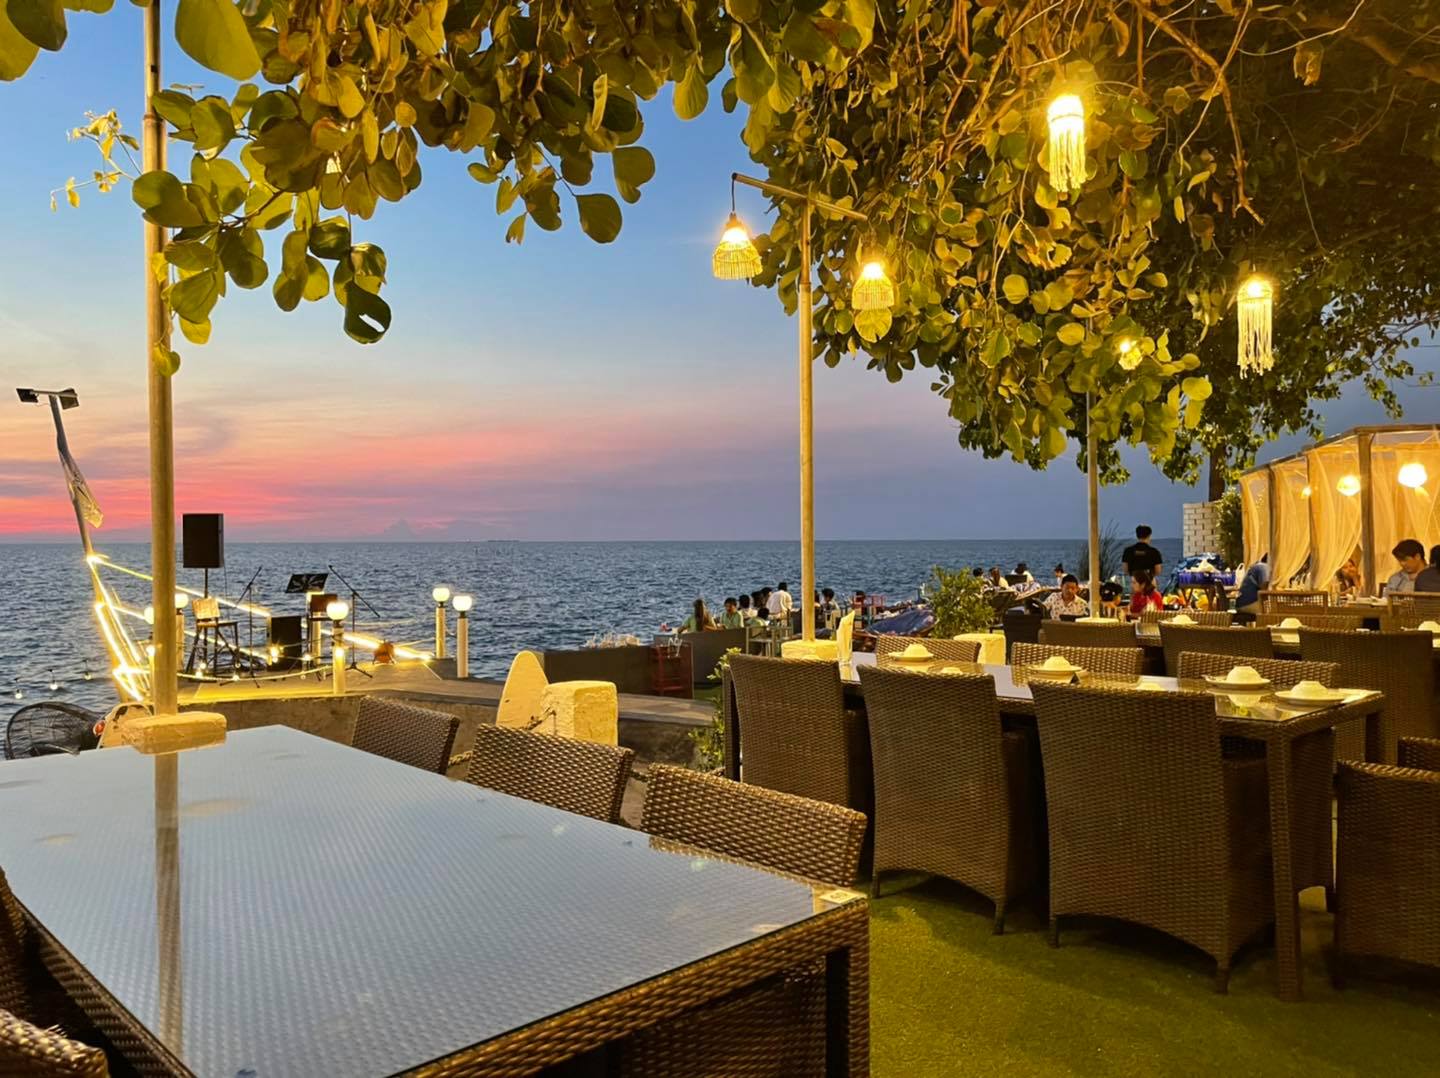 Bluefin Beach Bar & Restaurants (Bluefin Beach Bar & Restaurants) : Chon Buri (ชลบุรี)